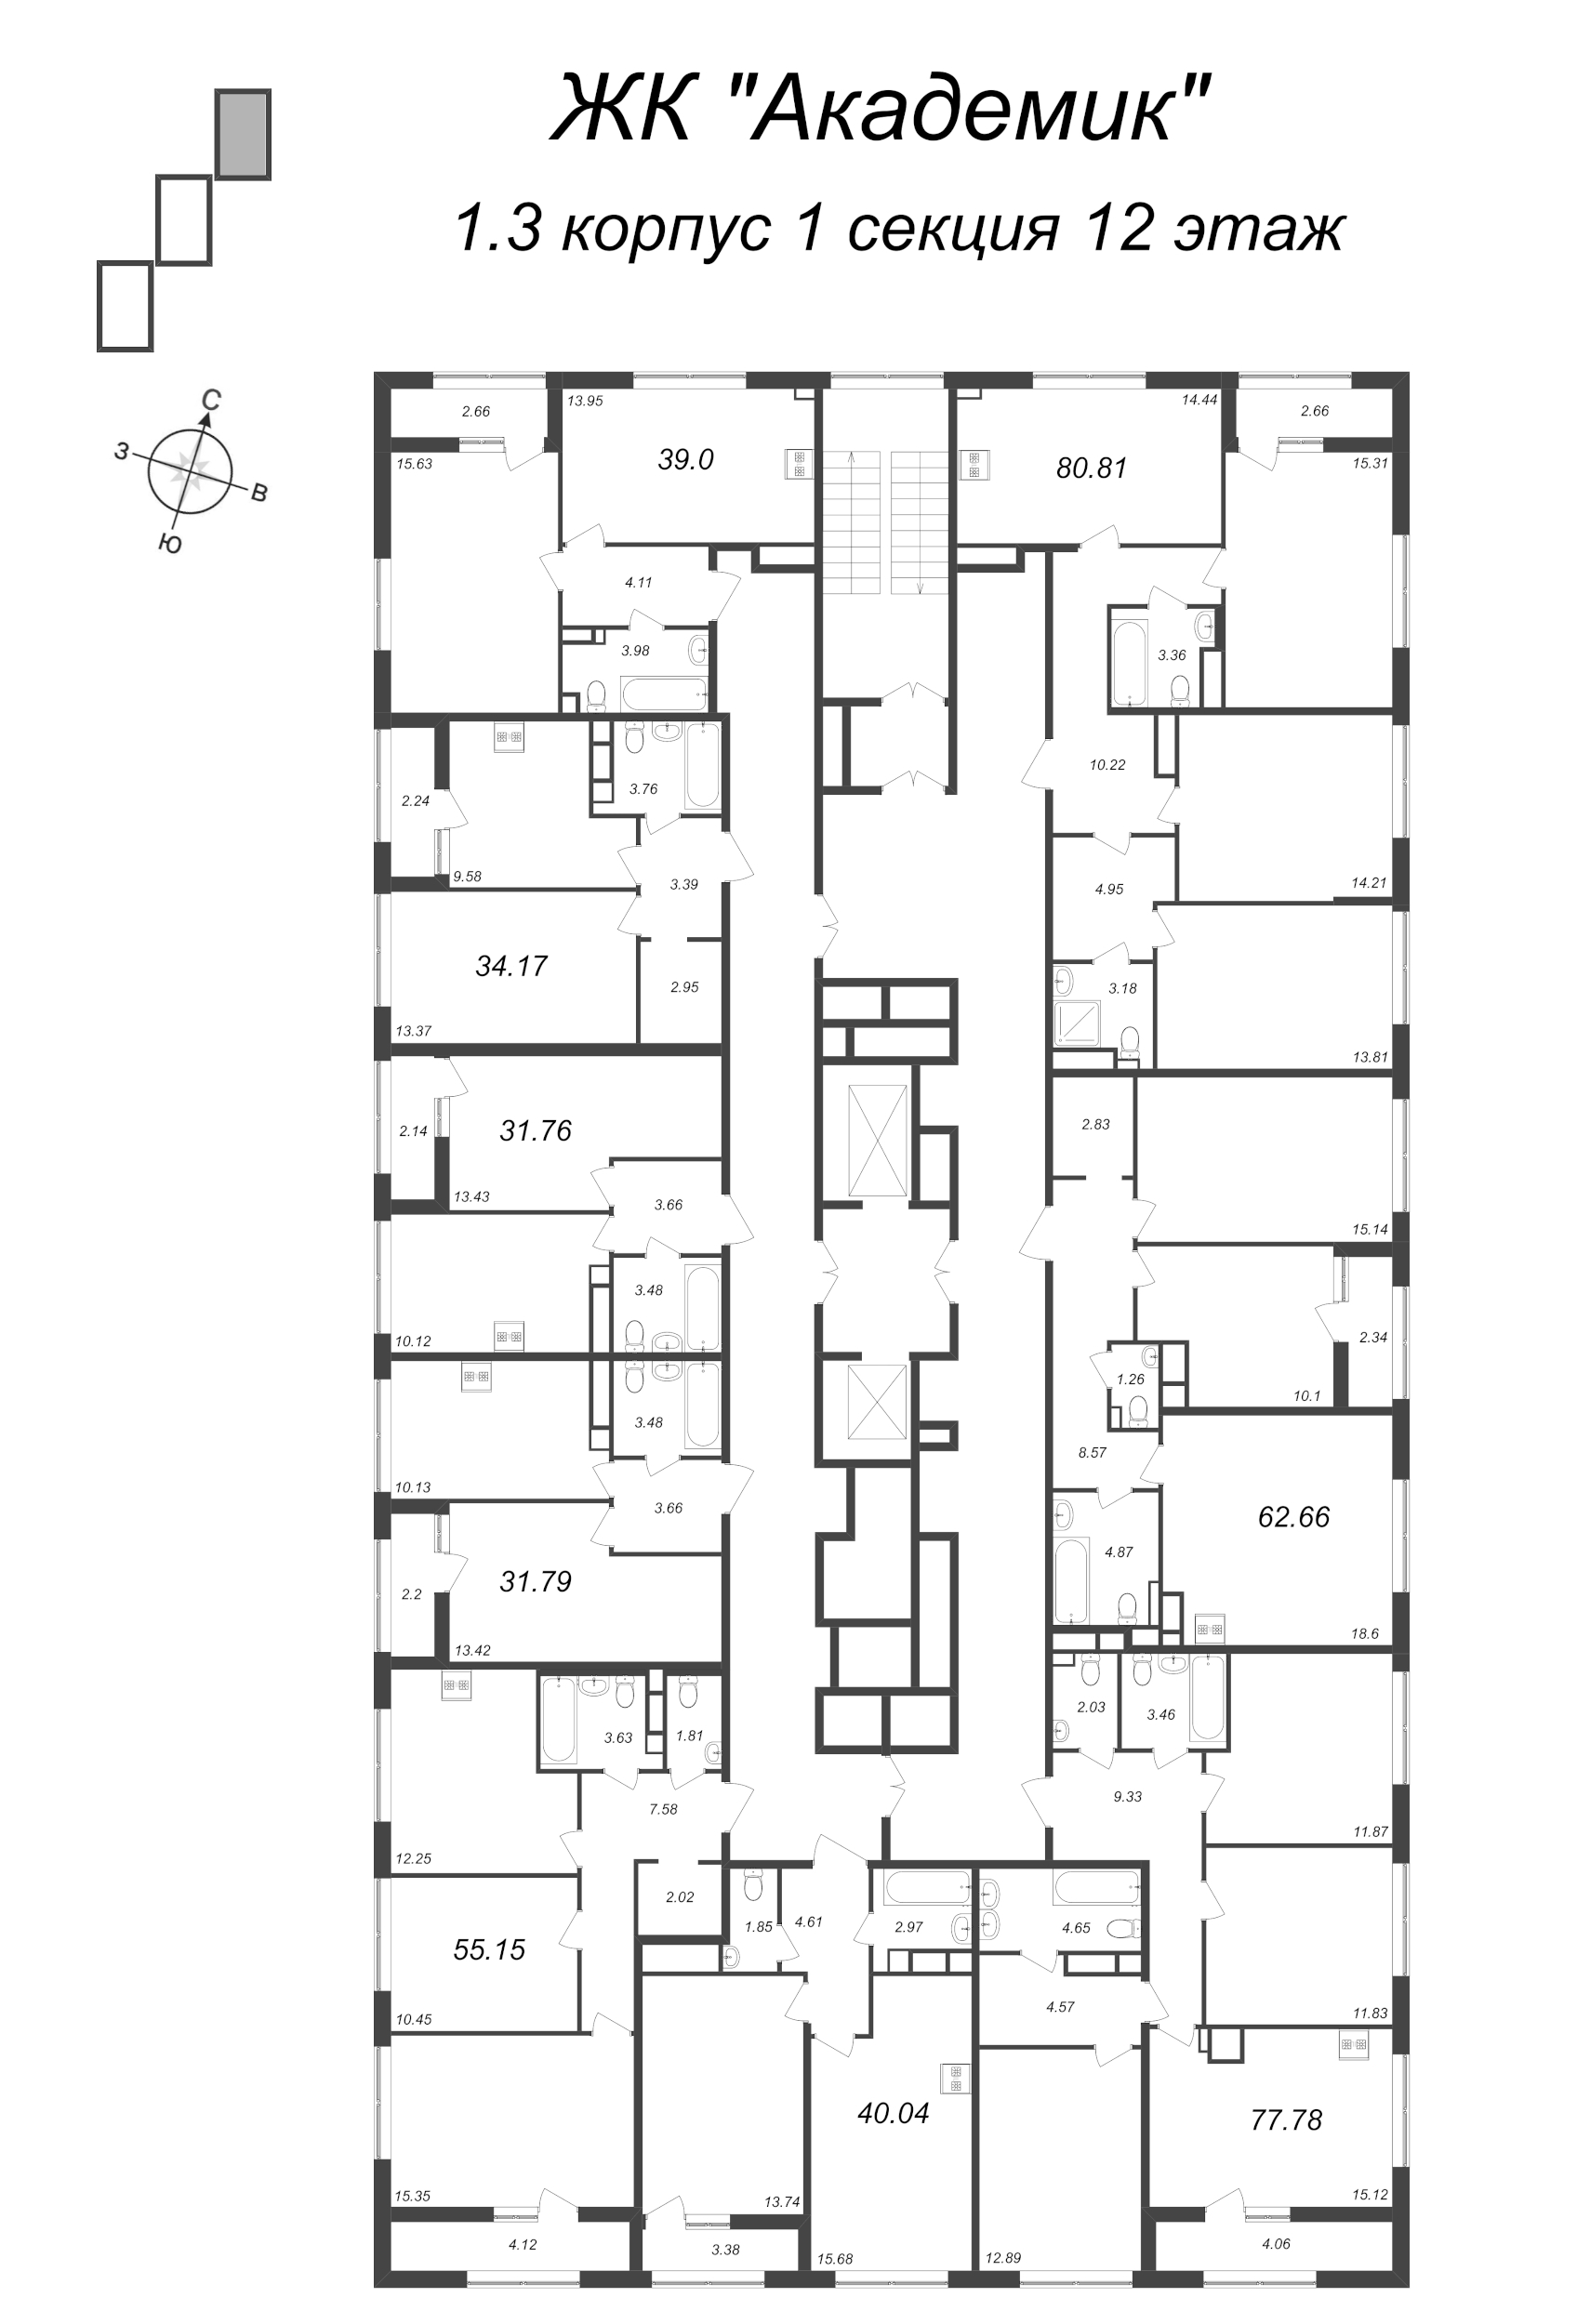 2-комнатная (Евро) квартира, 40.04 м² - планировка этажа